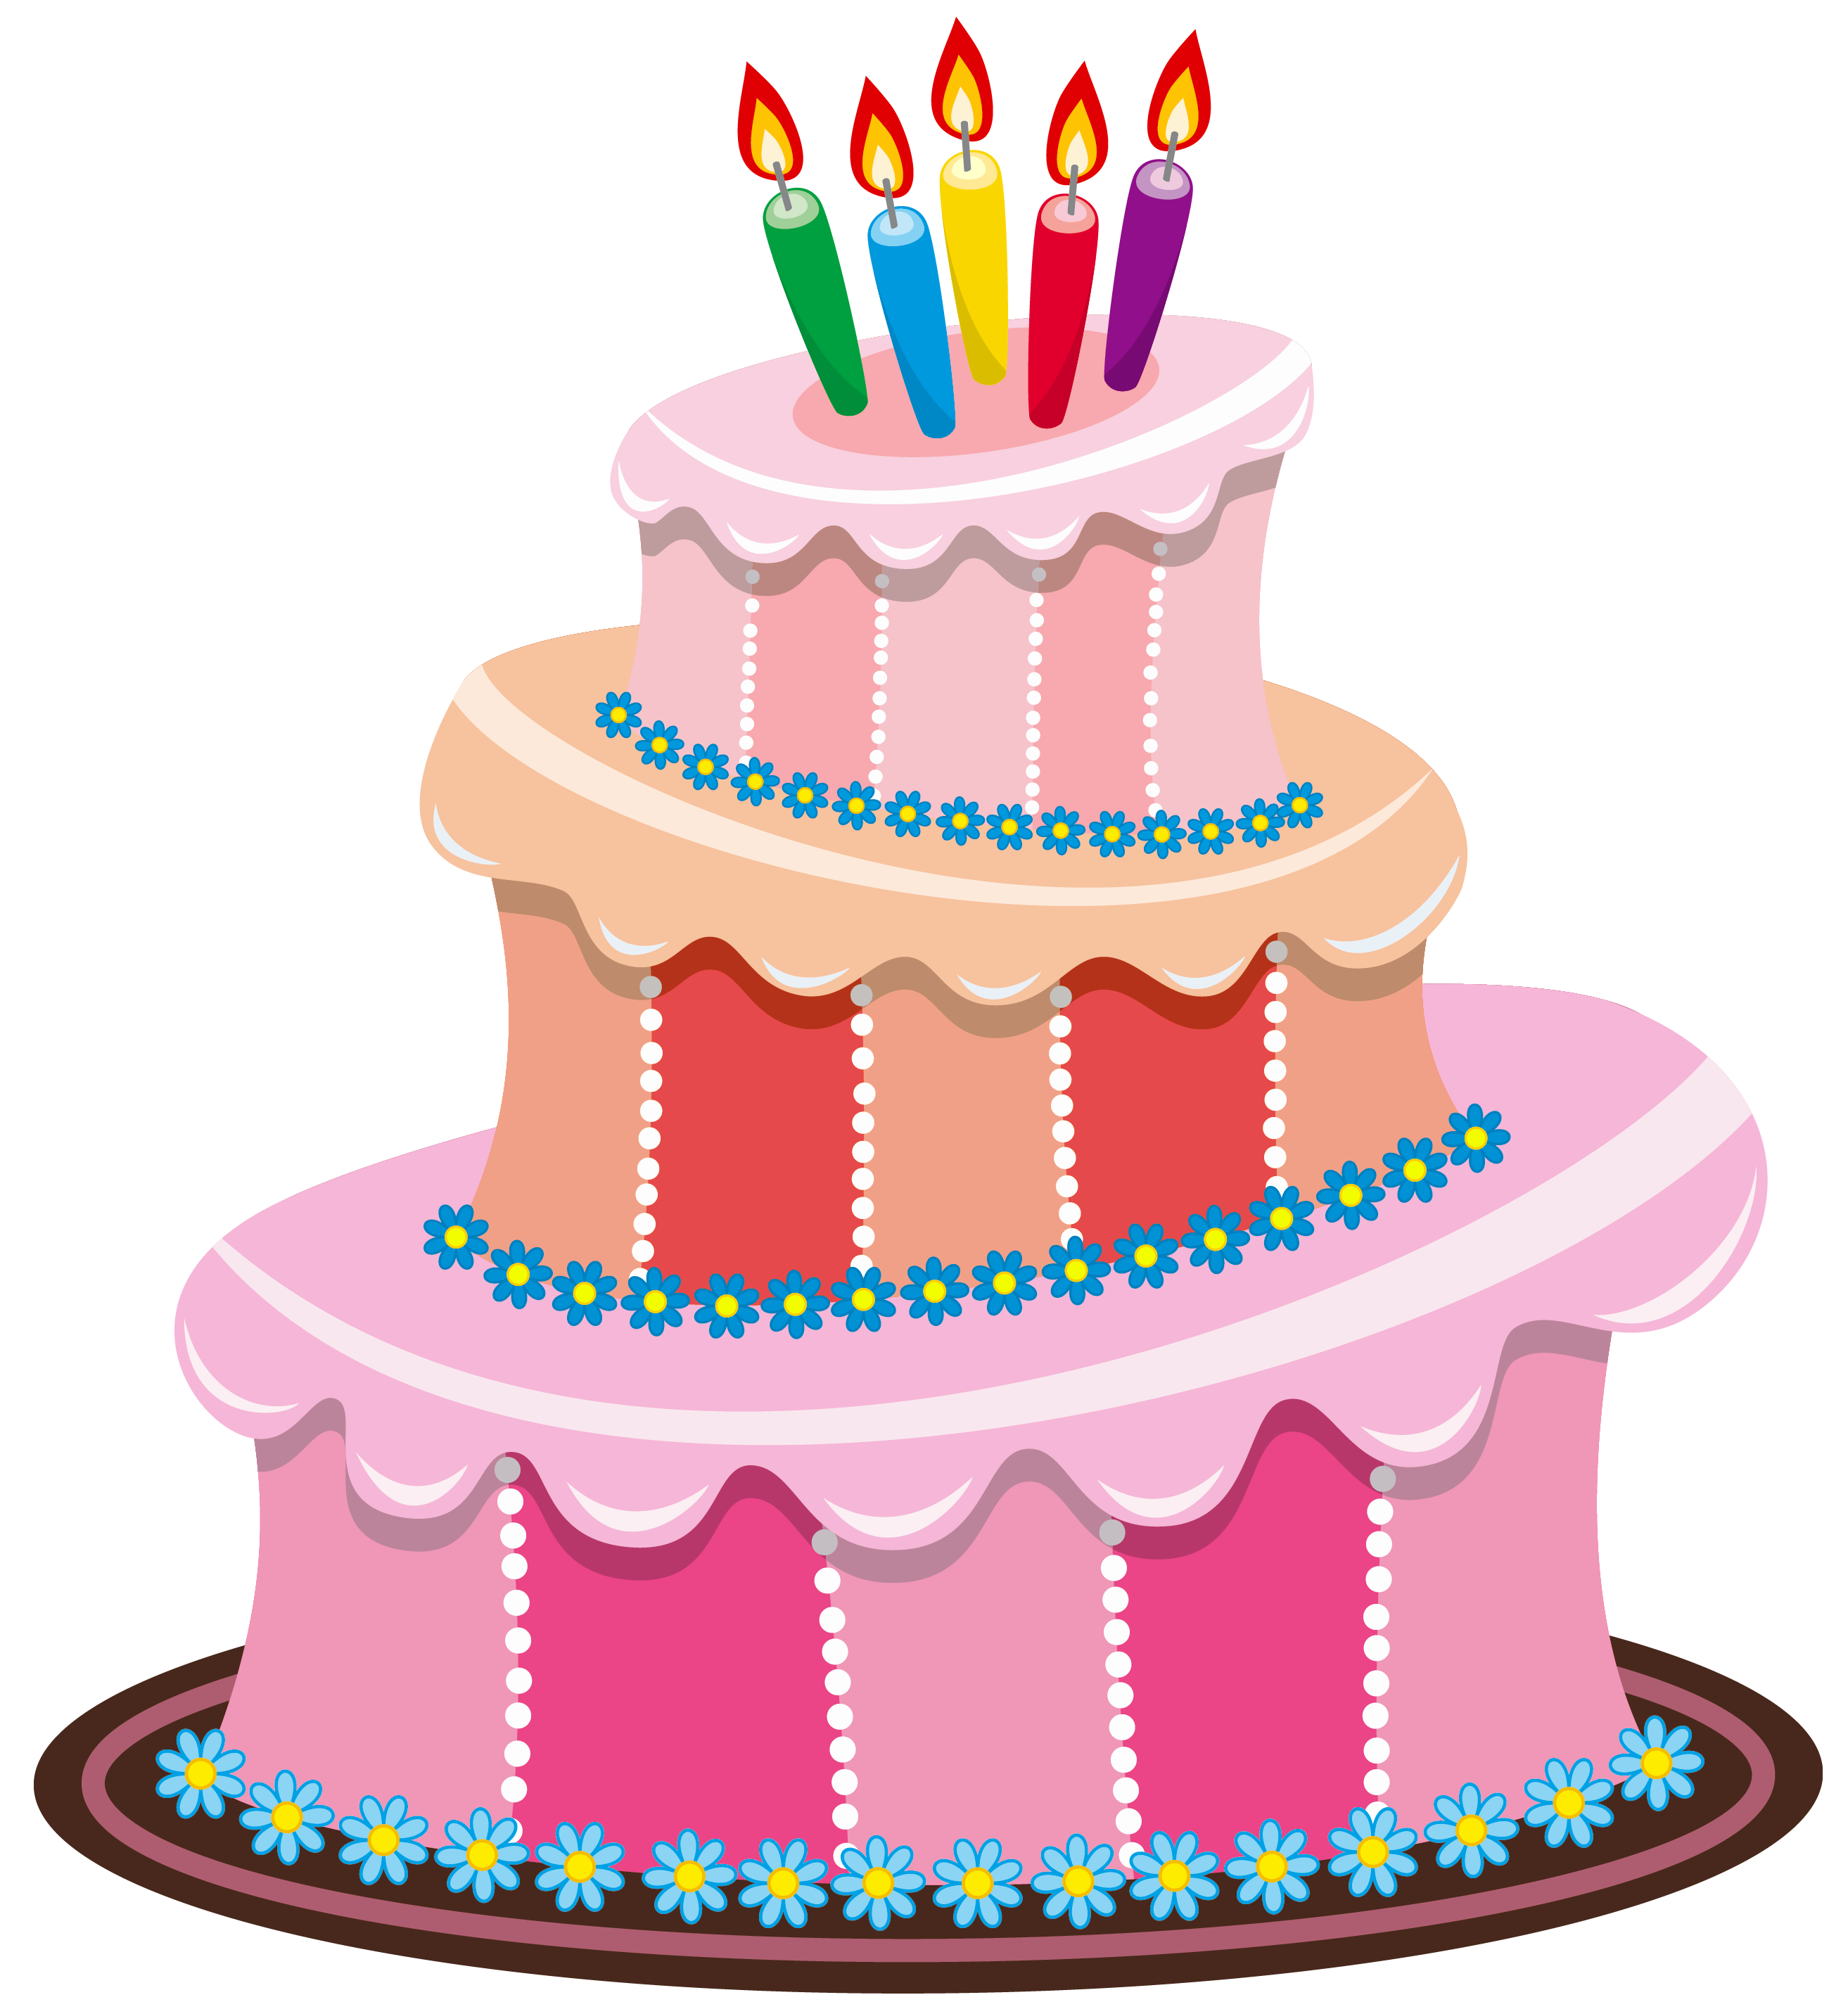 Birthday cake clipart download - ClipartFox